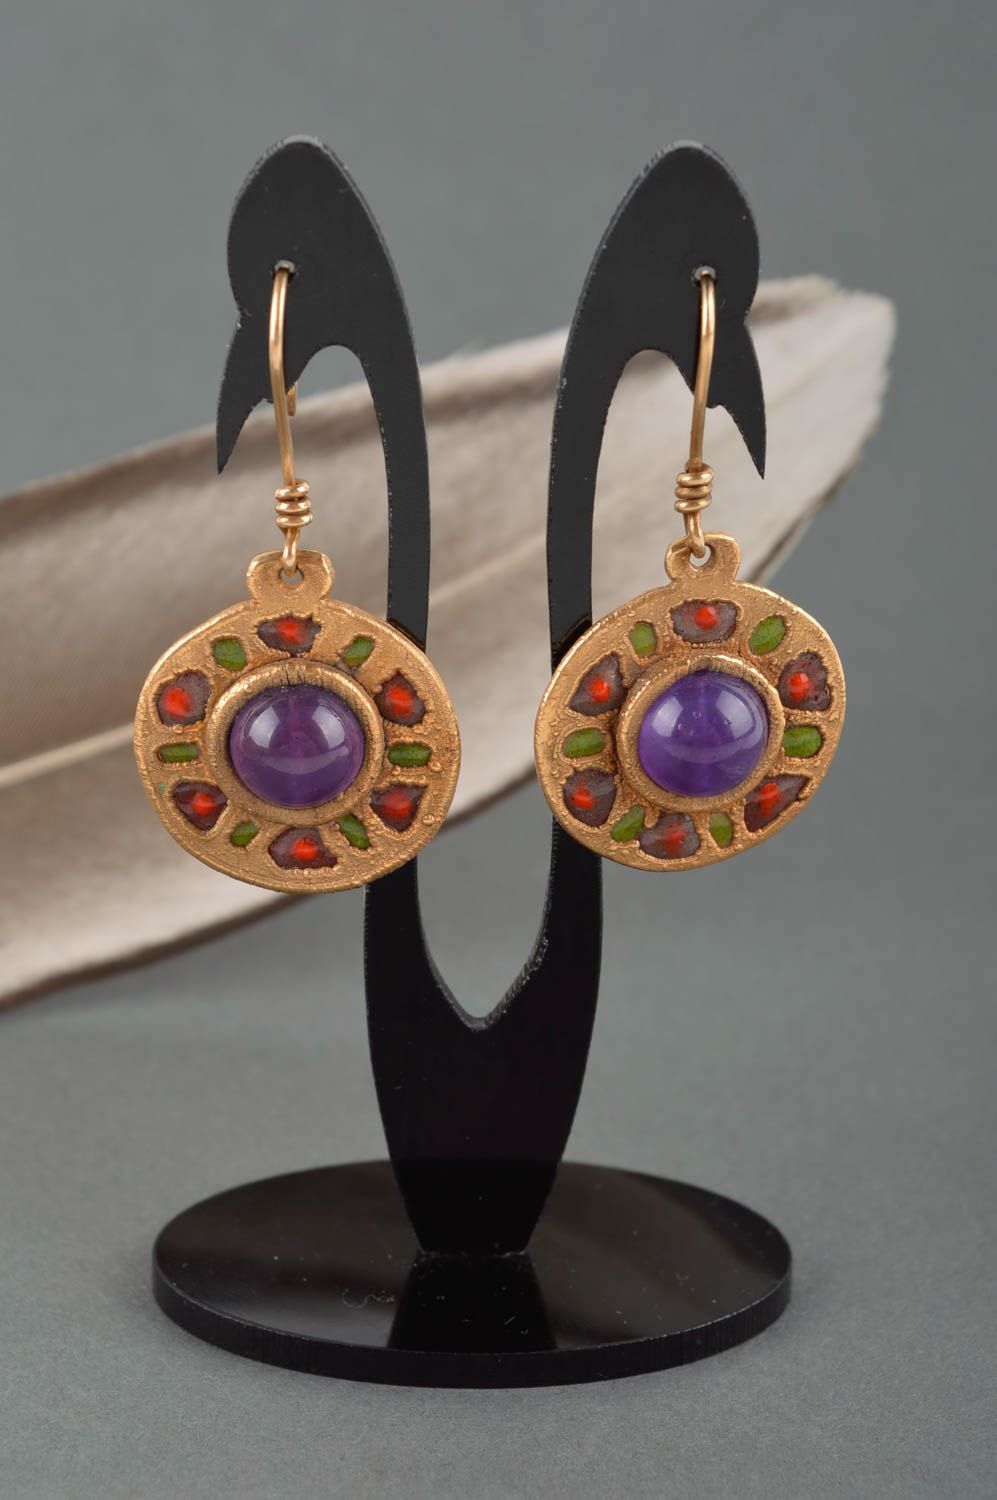 Handmade metal earrings gemstone earrings for girls cool jewelry gifts for her photo 1